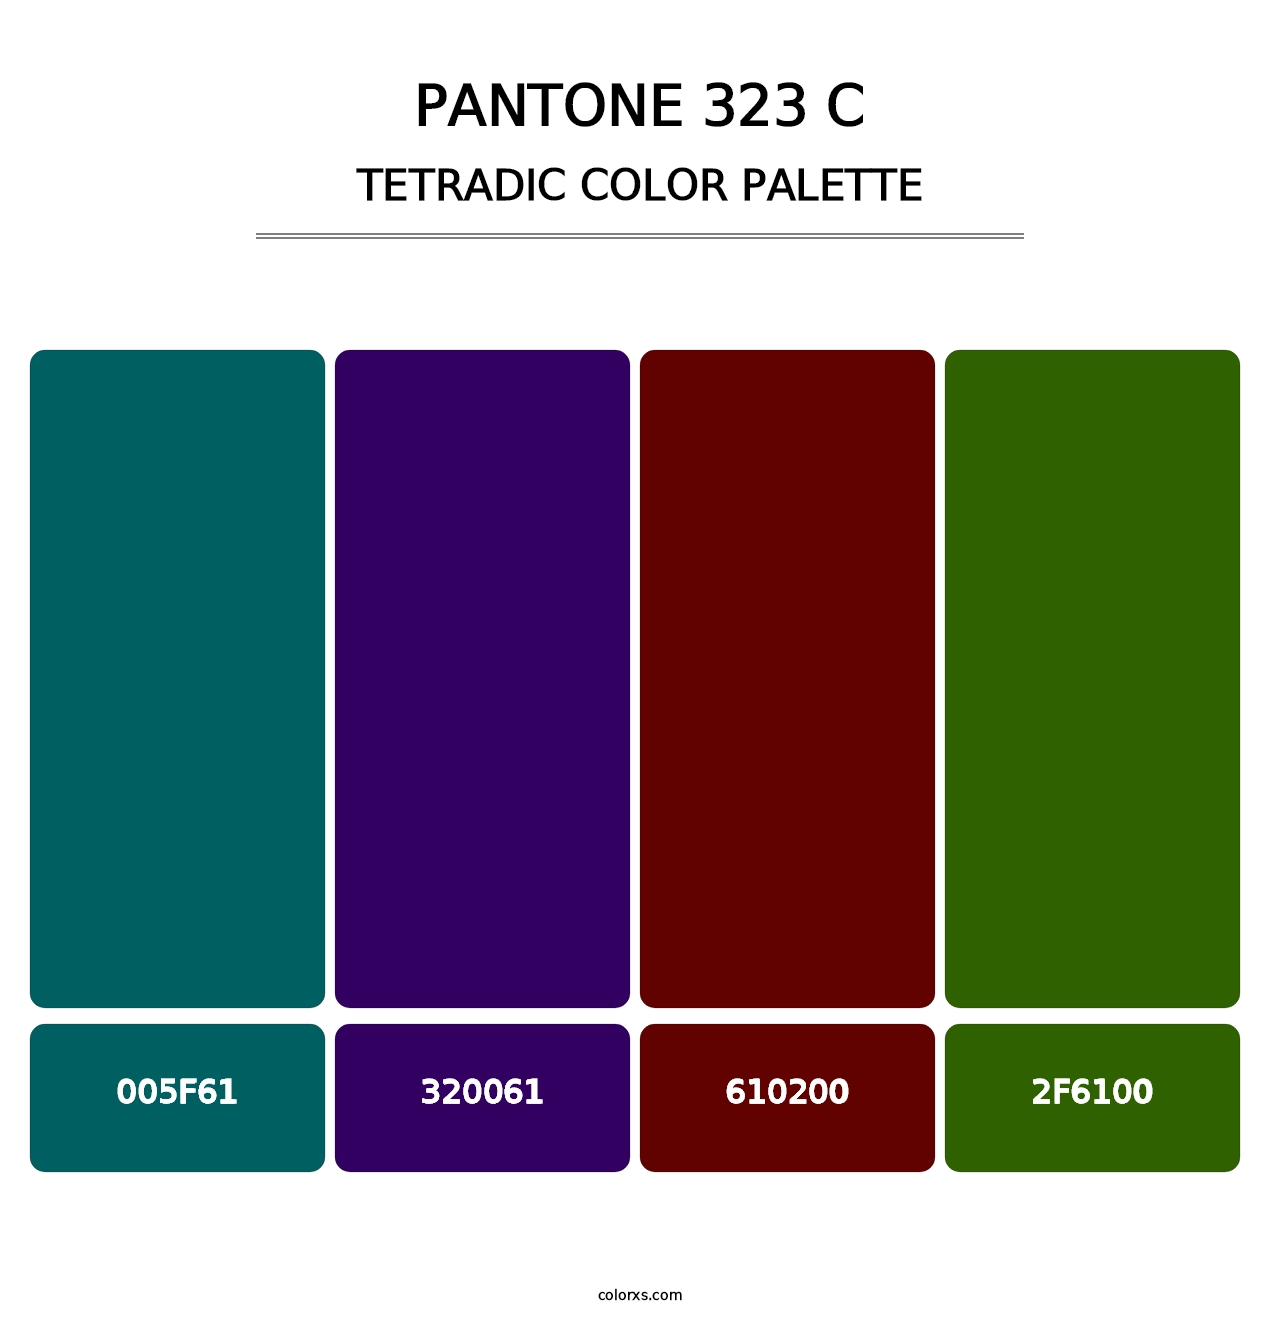 PANTONE 323 C - Tetradic Color Palette